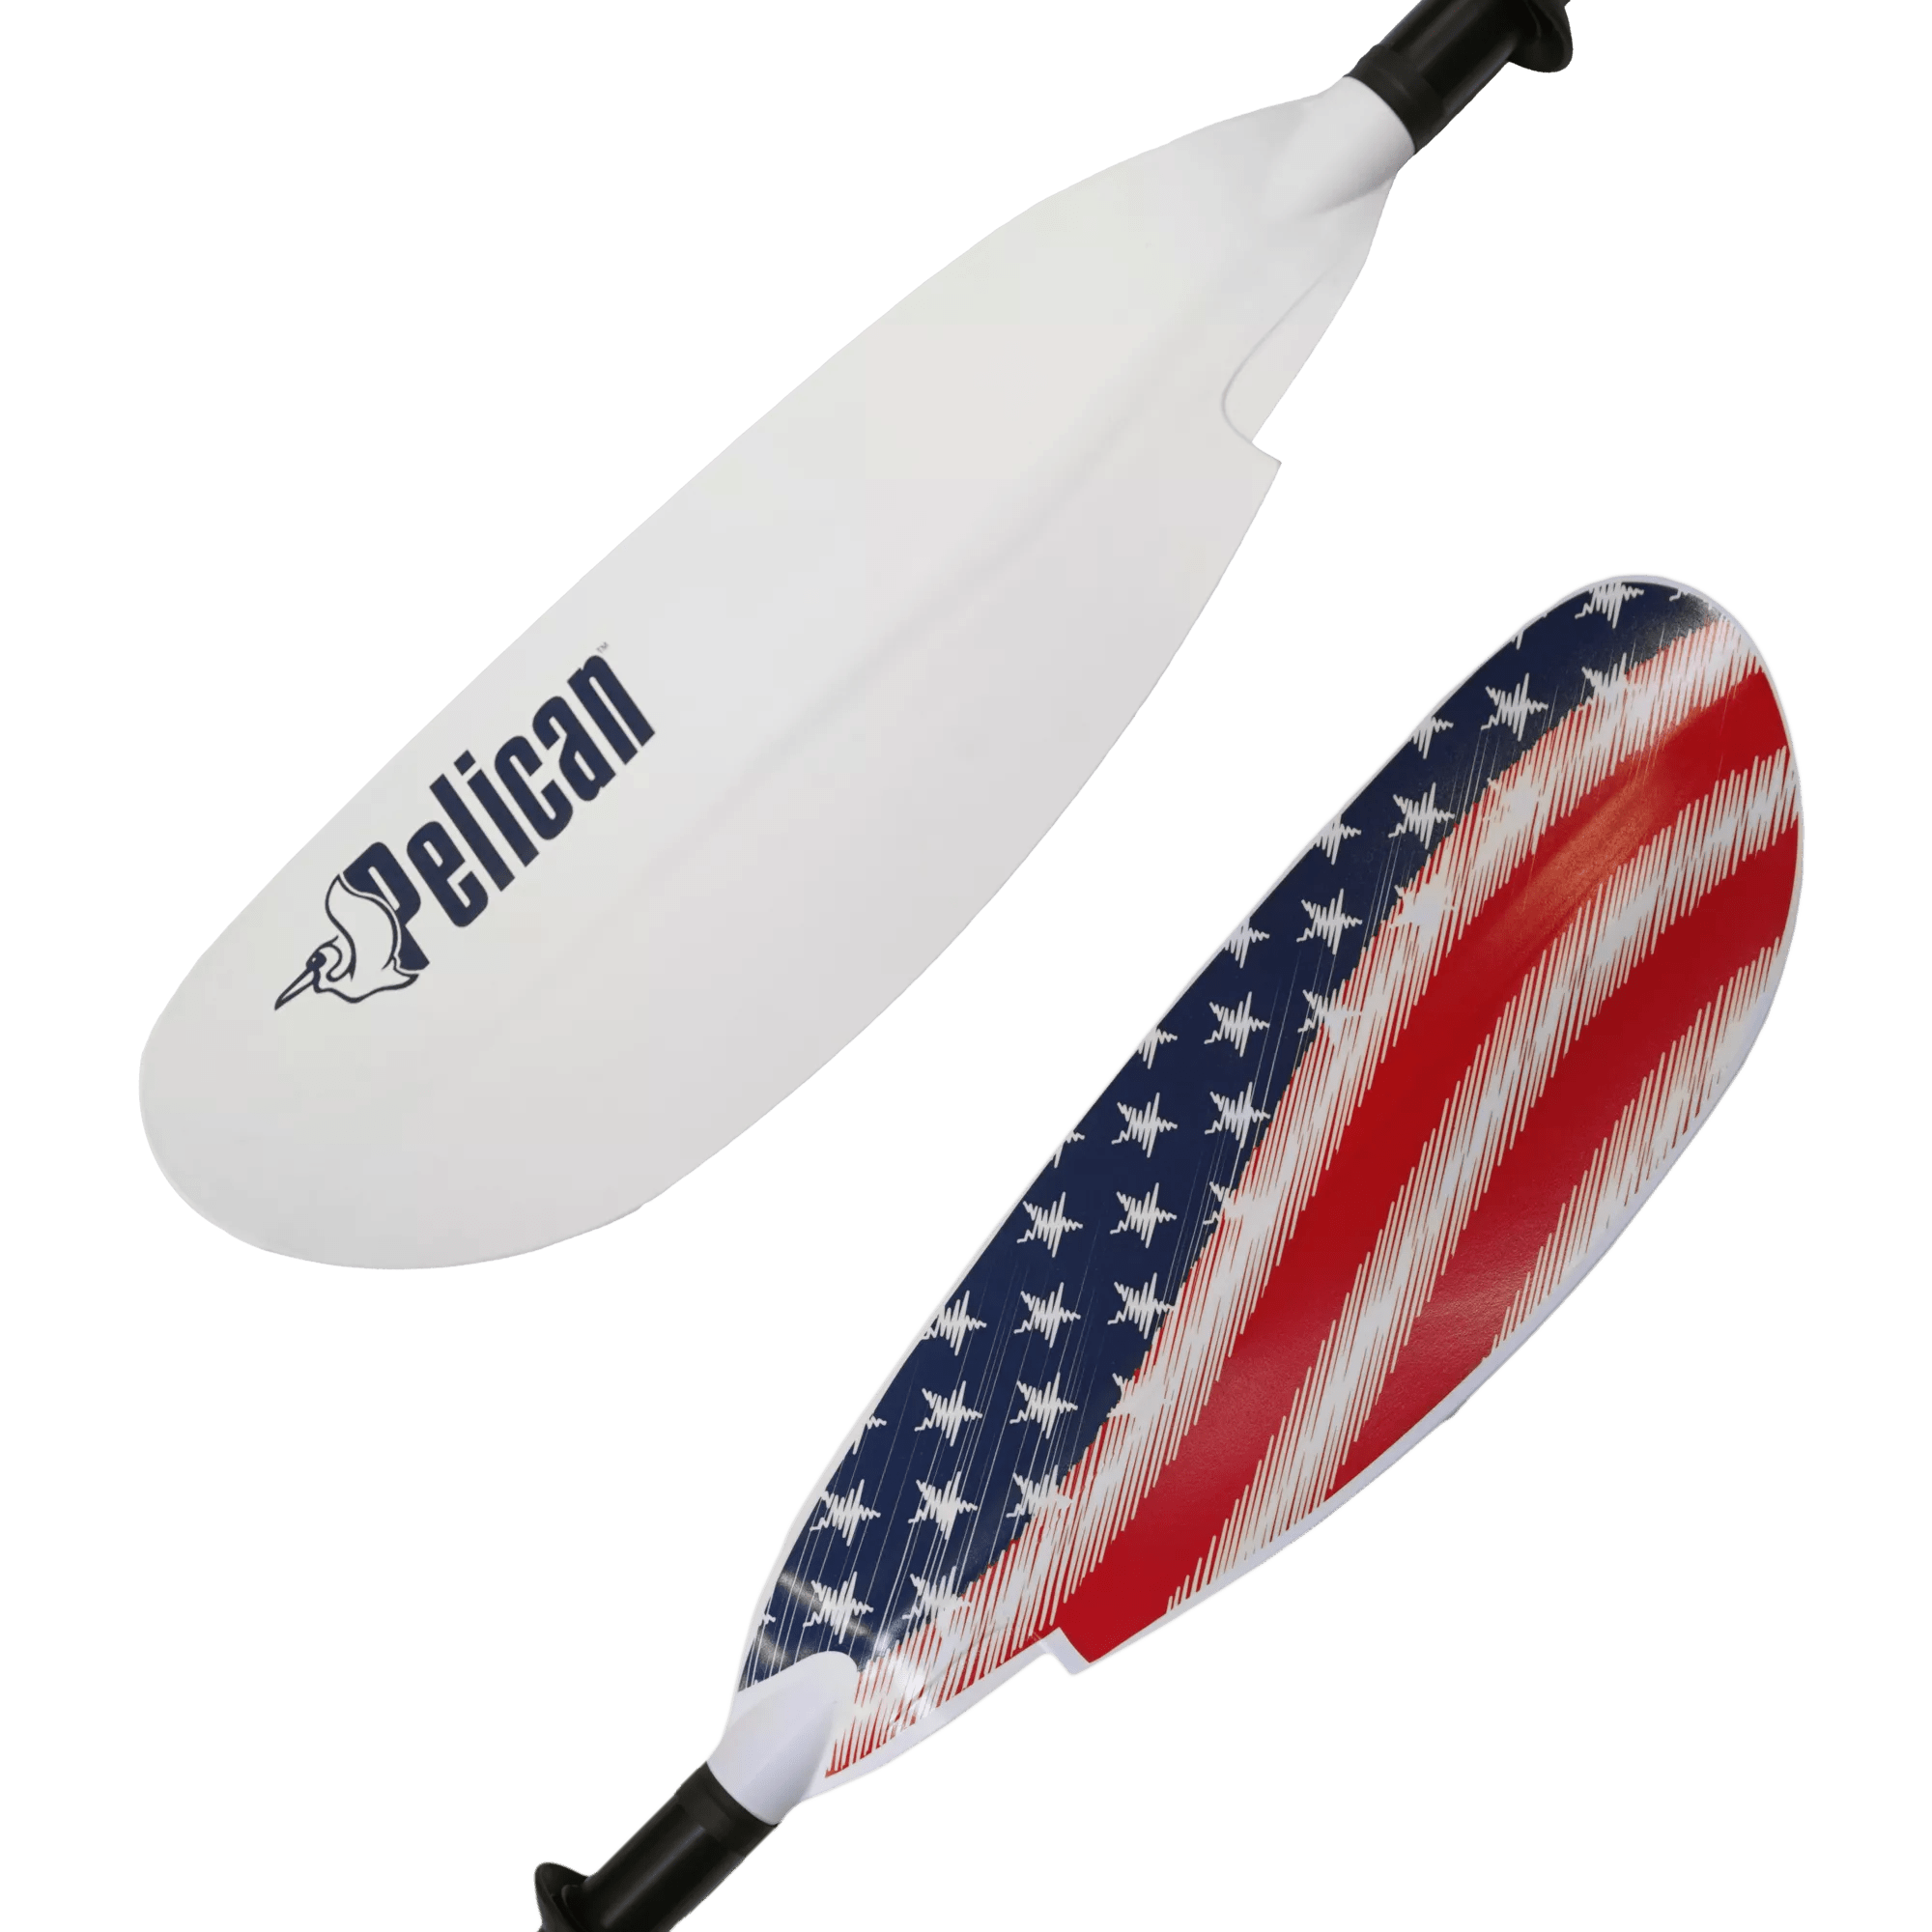 PELICAN - Poseidon Kayak Paddle 230 cm (90.5") - White - PS1981-00 - ISO 